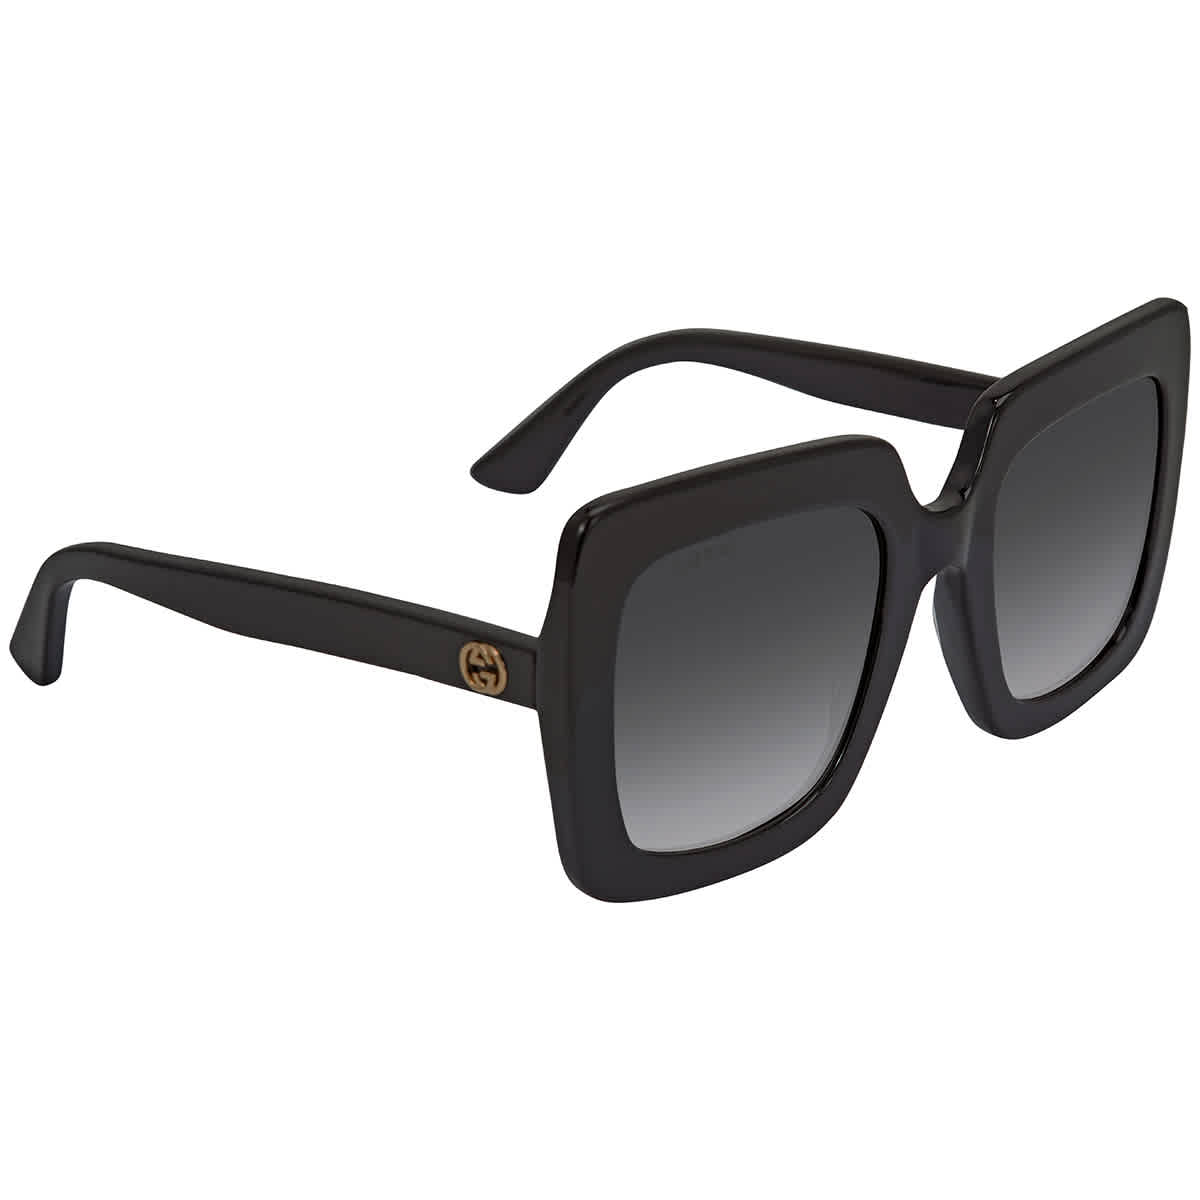 Gucci Grey Gradient Square Ladies Sunglasses GG0328S 001 53 - image 1 of 2